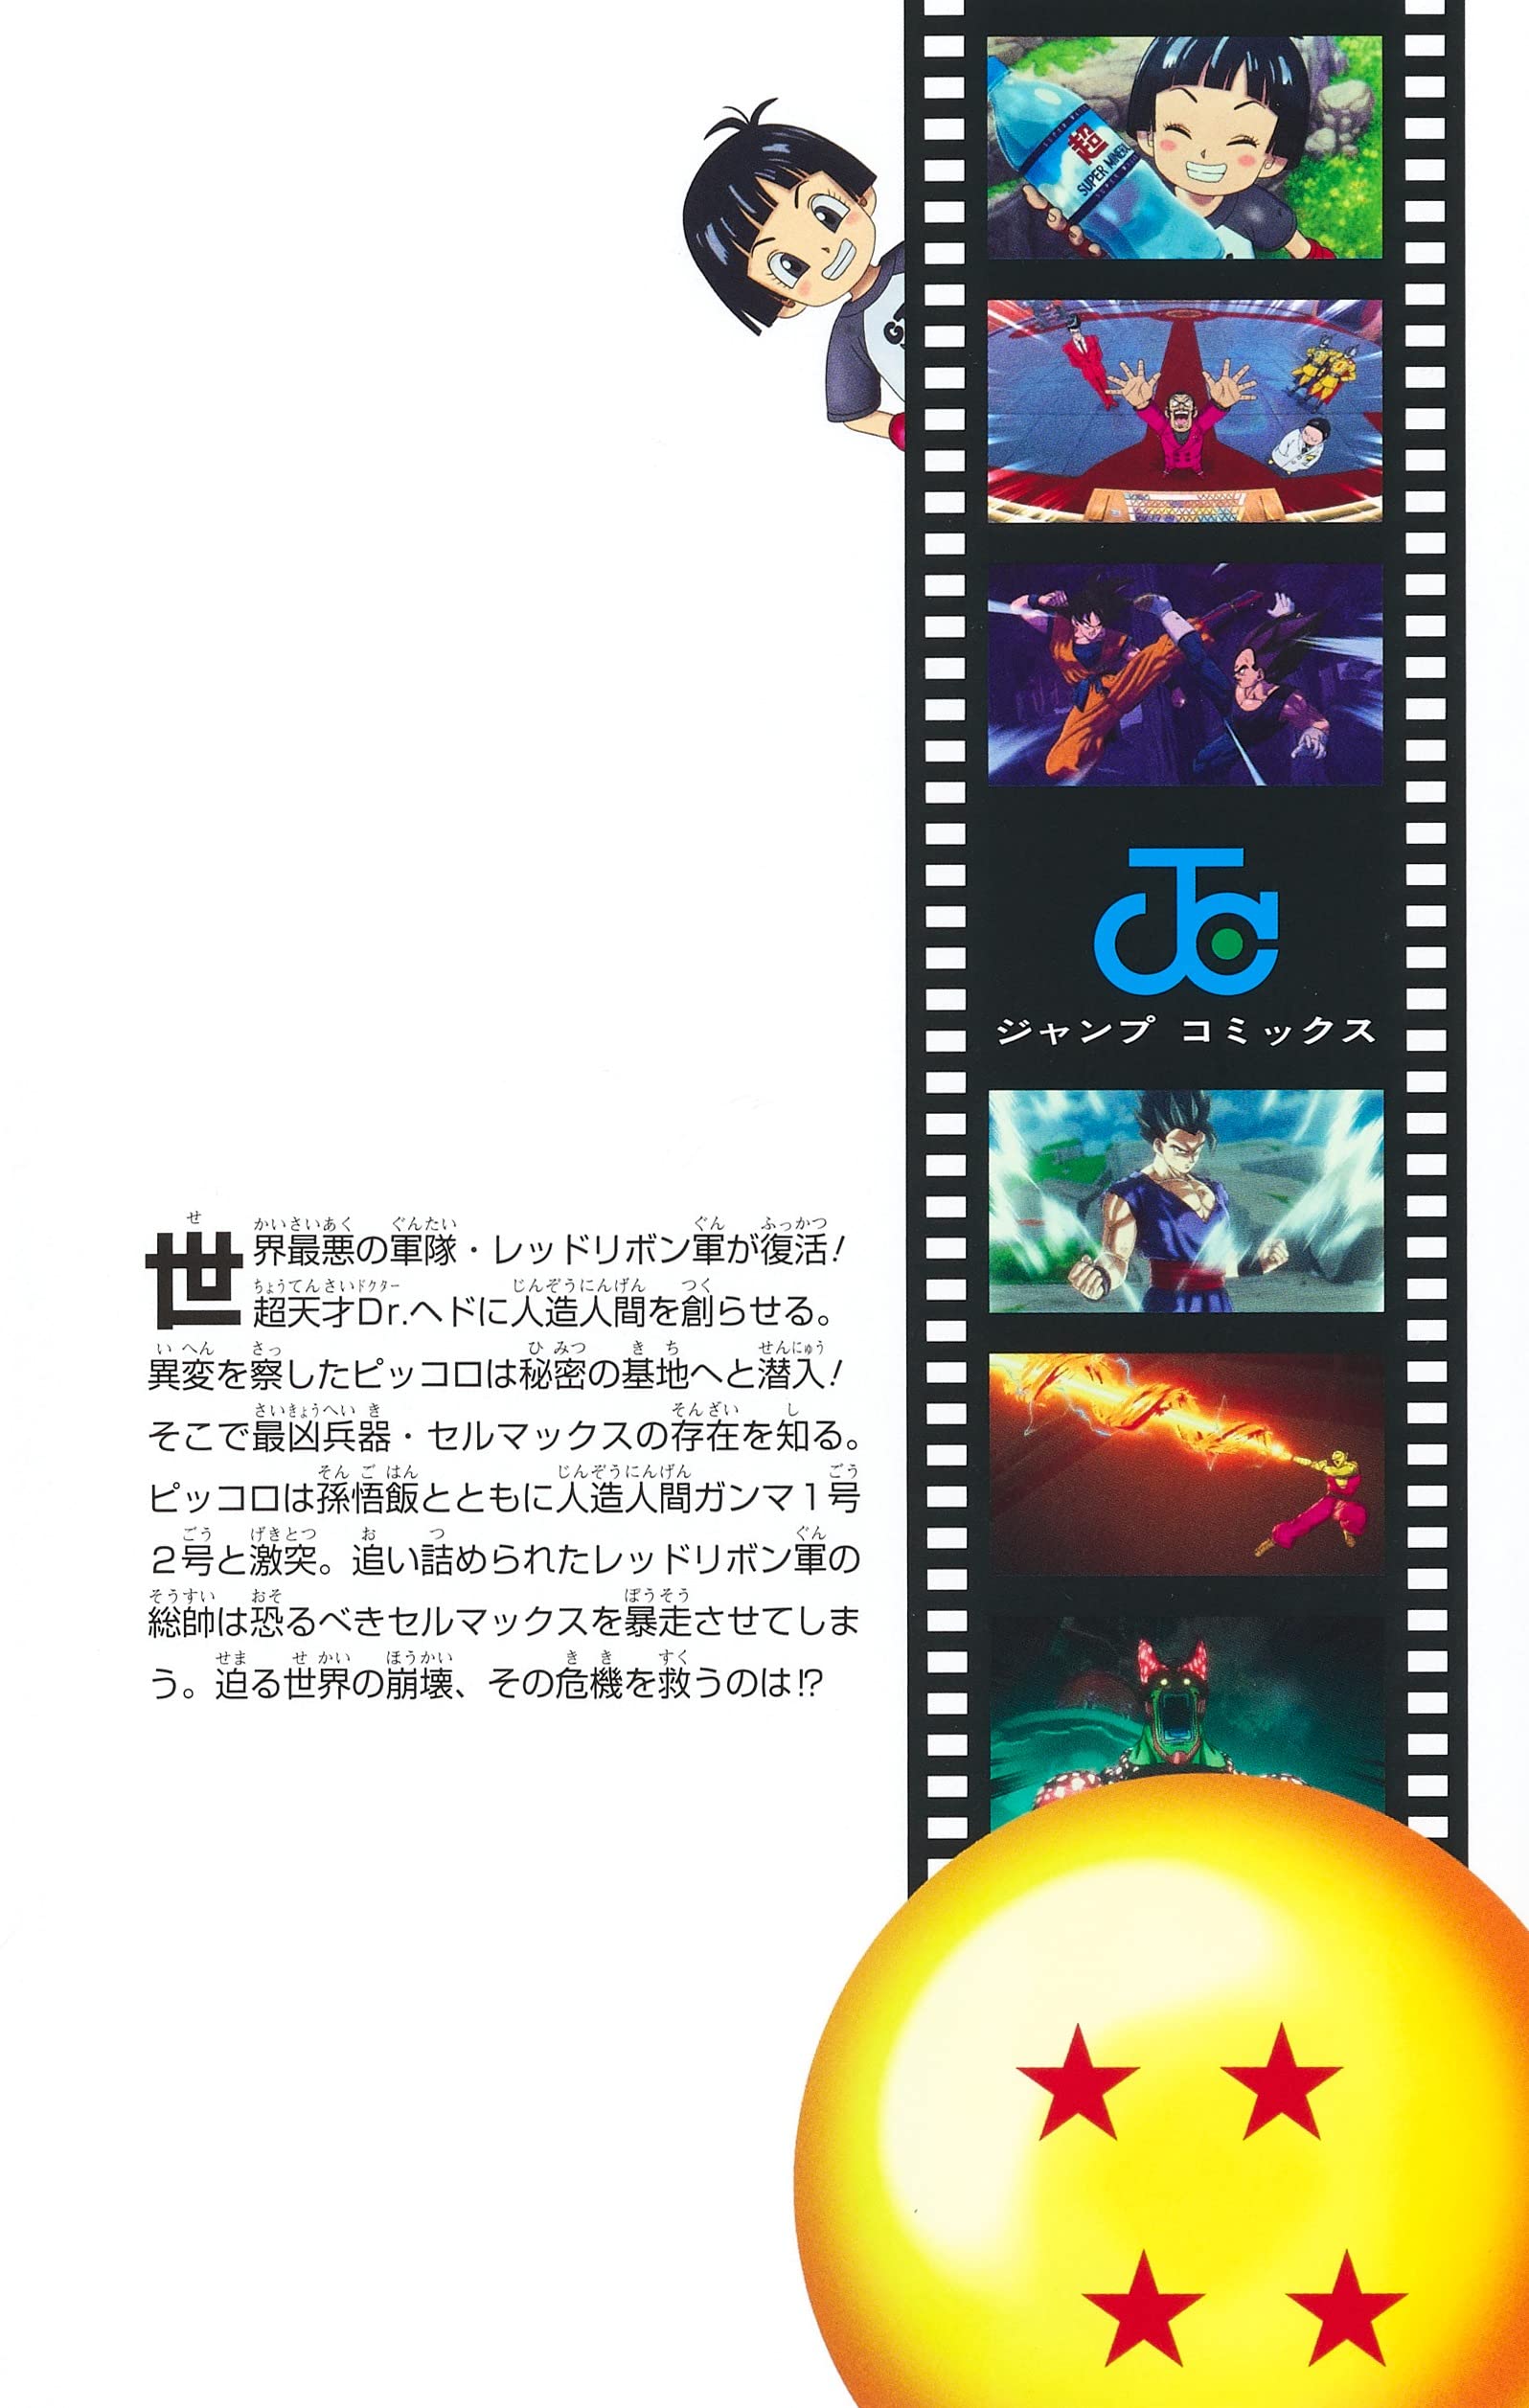 JAPAN Dragon Ball Super: Super Hero Anime Comics (manga book)